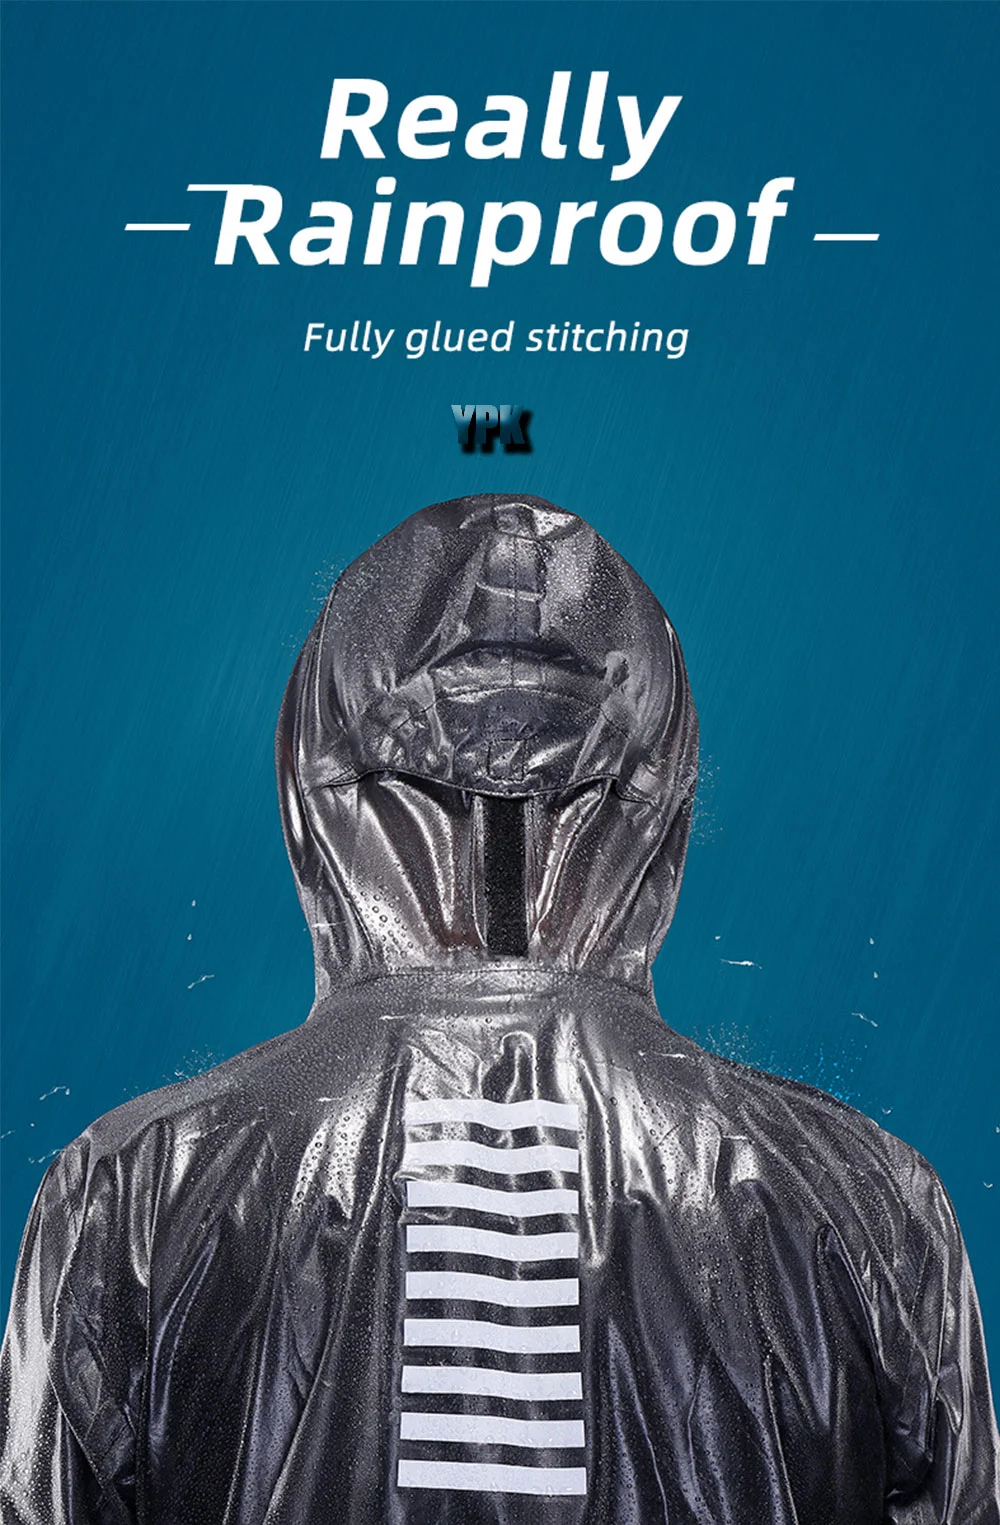 Rockbros Sells High-Quality Waterproof Raincoats and Cycling Raincoats